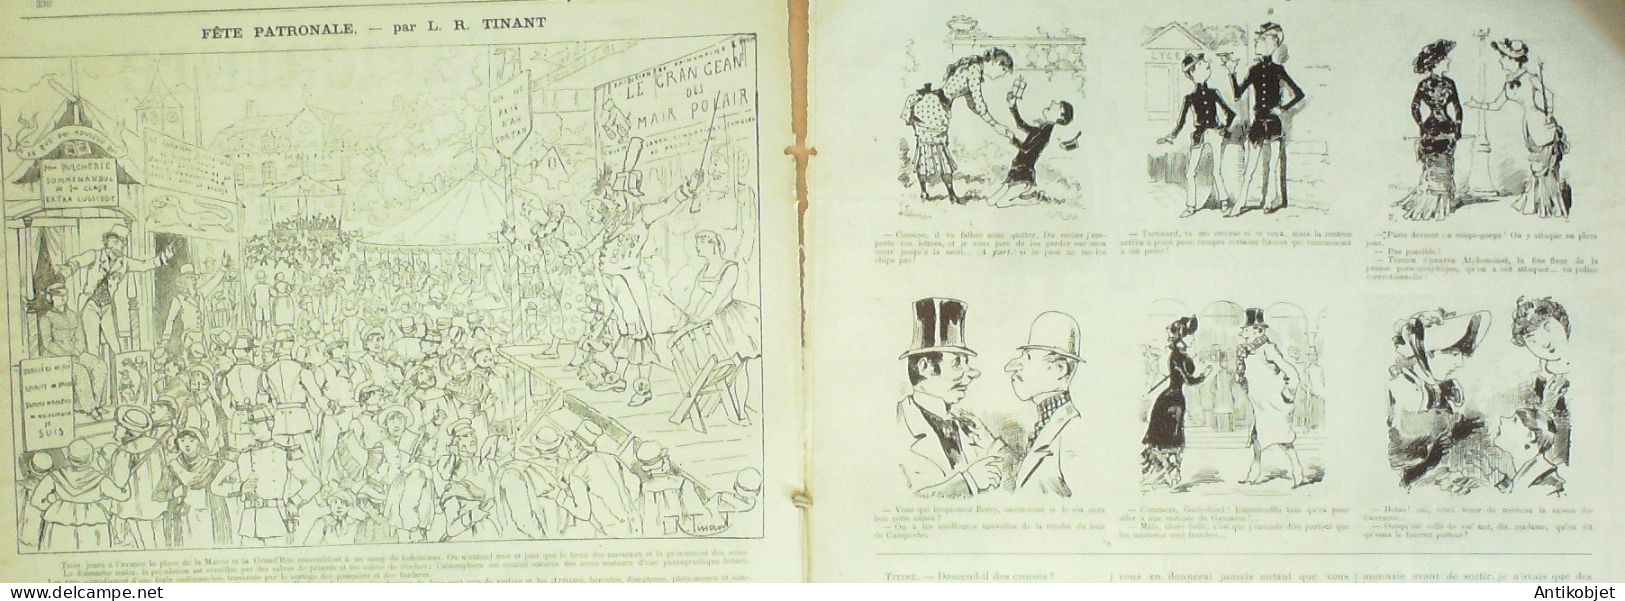 La Caricature 1882 N°146 L'armée Allemande Caran D'Ache Tinant Trock Loys - Revues Anciennes - Avant 1900